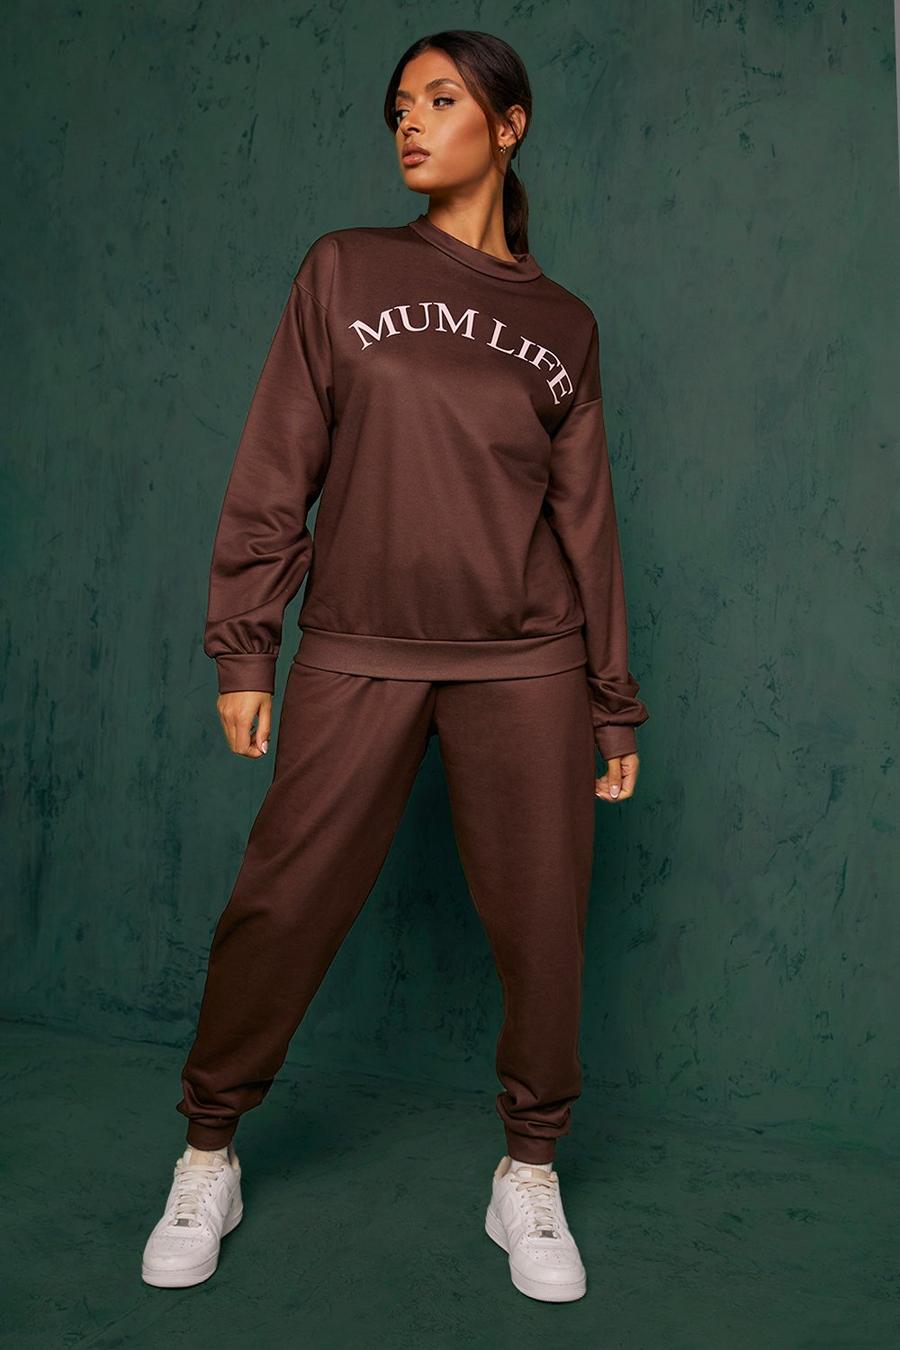 Sweatshirt-Trainingsanzug mit Mum Life Print, Chocolate marron